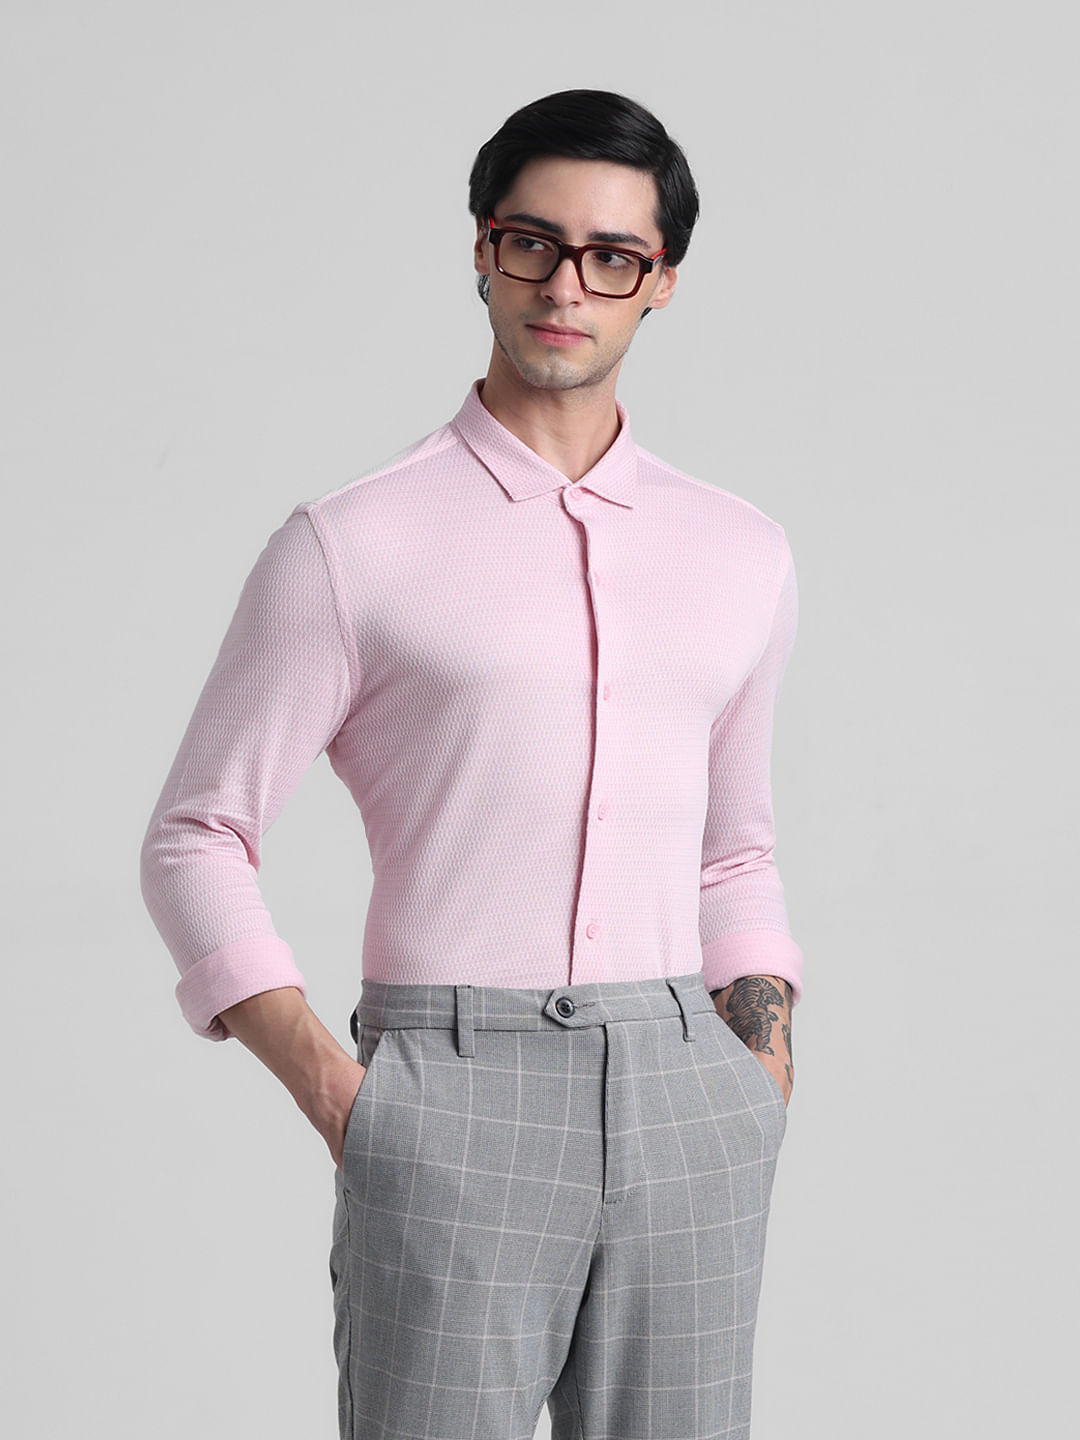 Pink shirt dark pants hi-res stock photography and images - Alamy